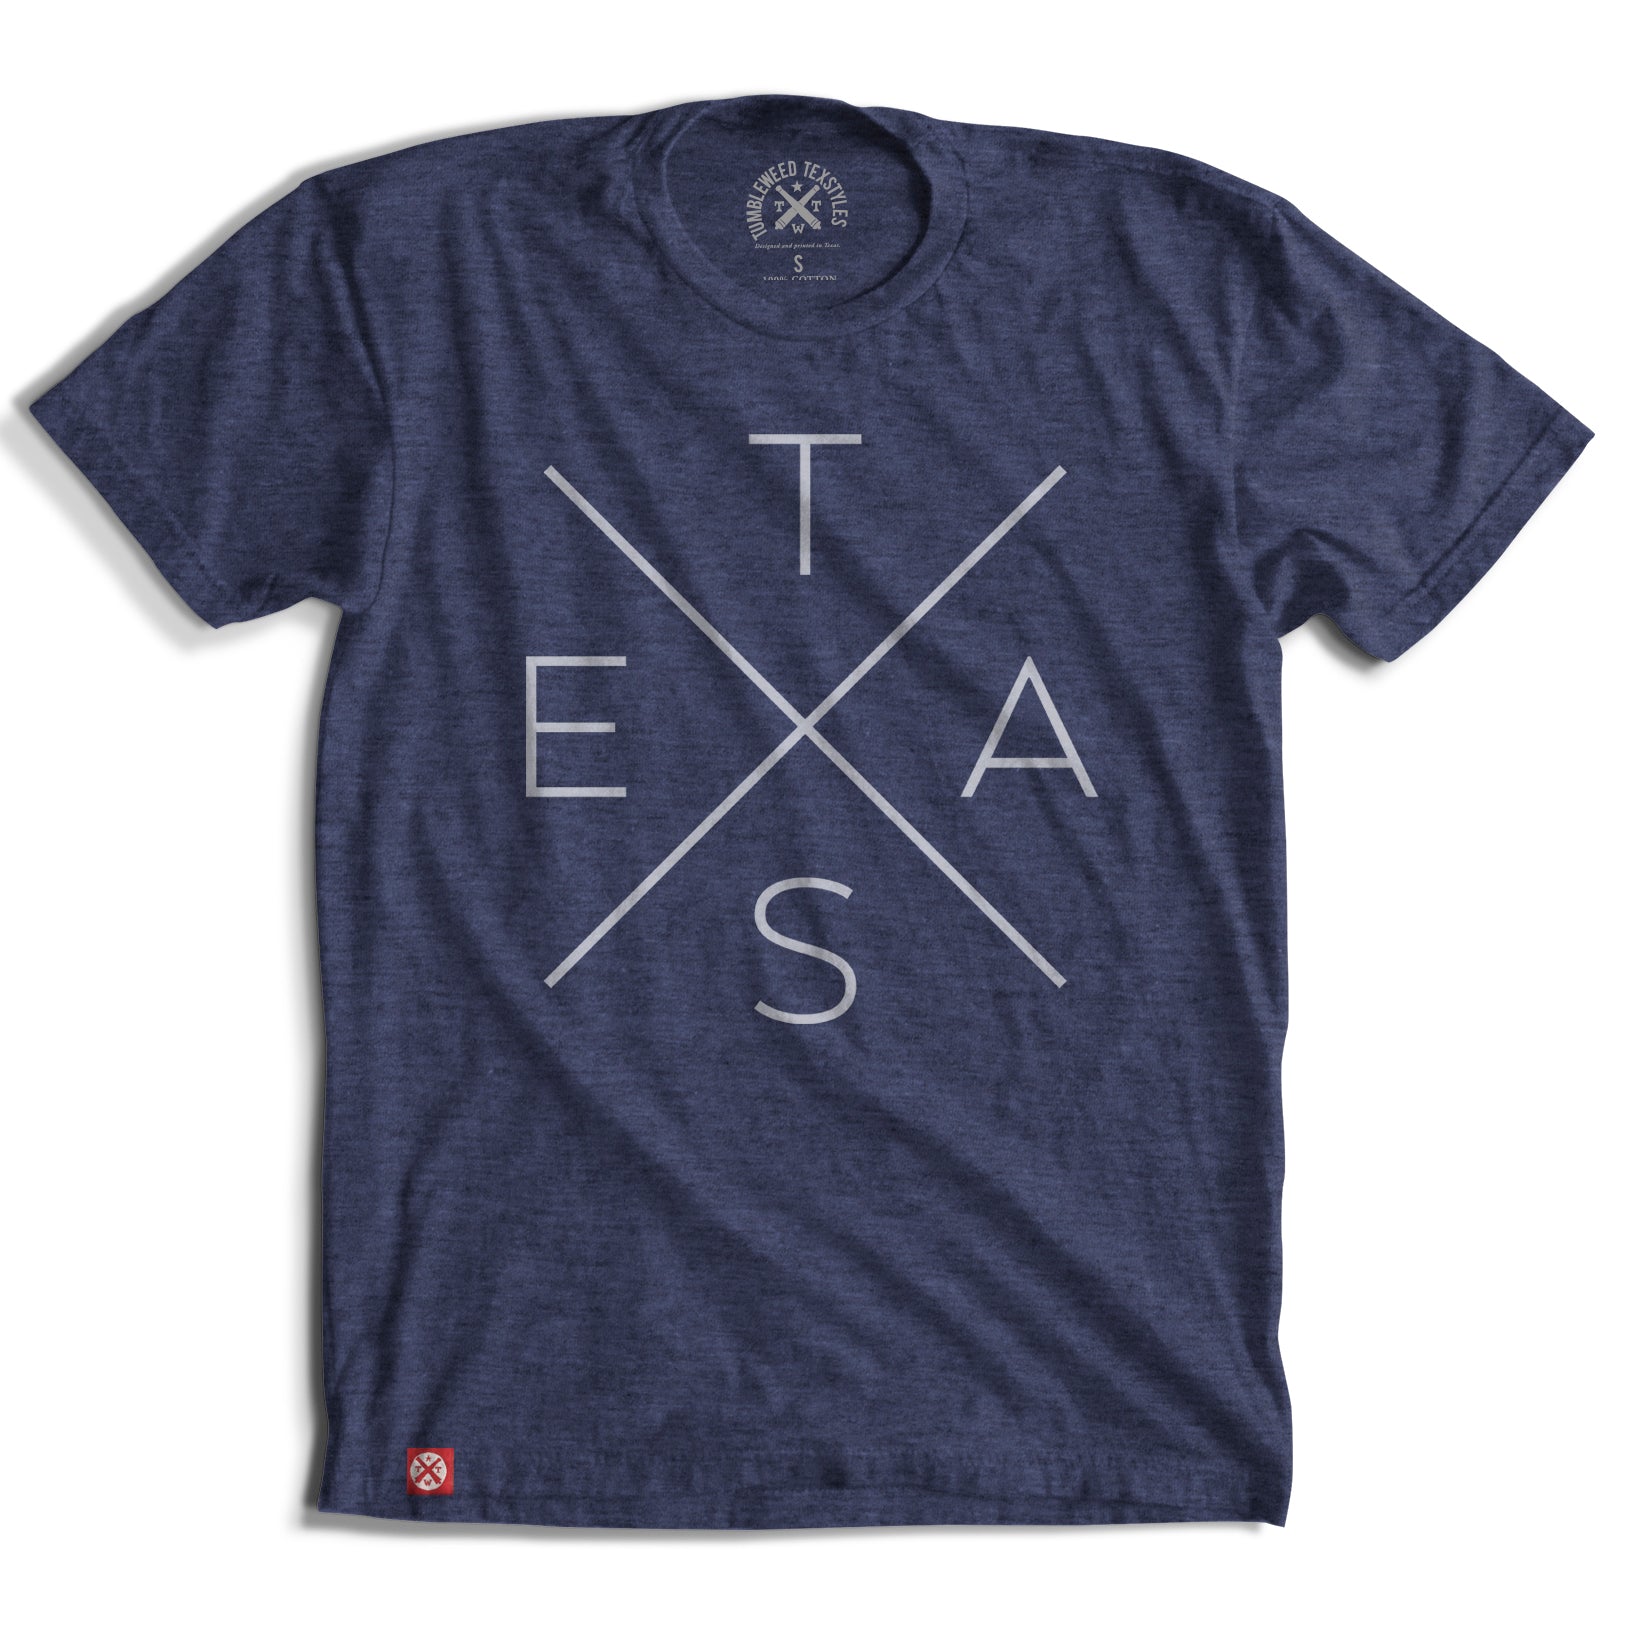 Big X Texas T-Shirt (Navy)